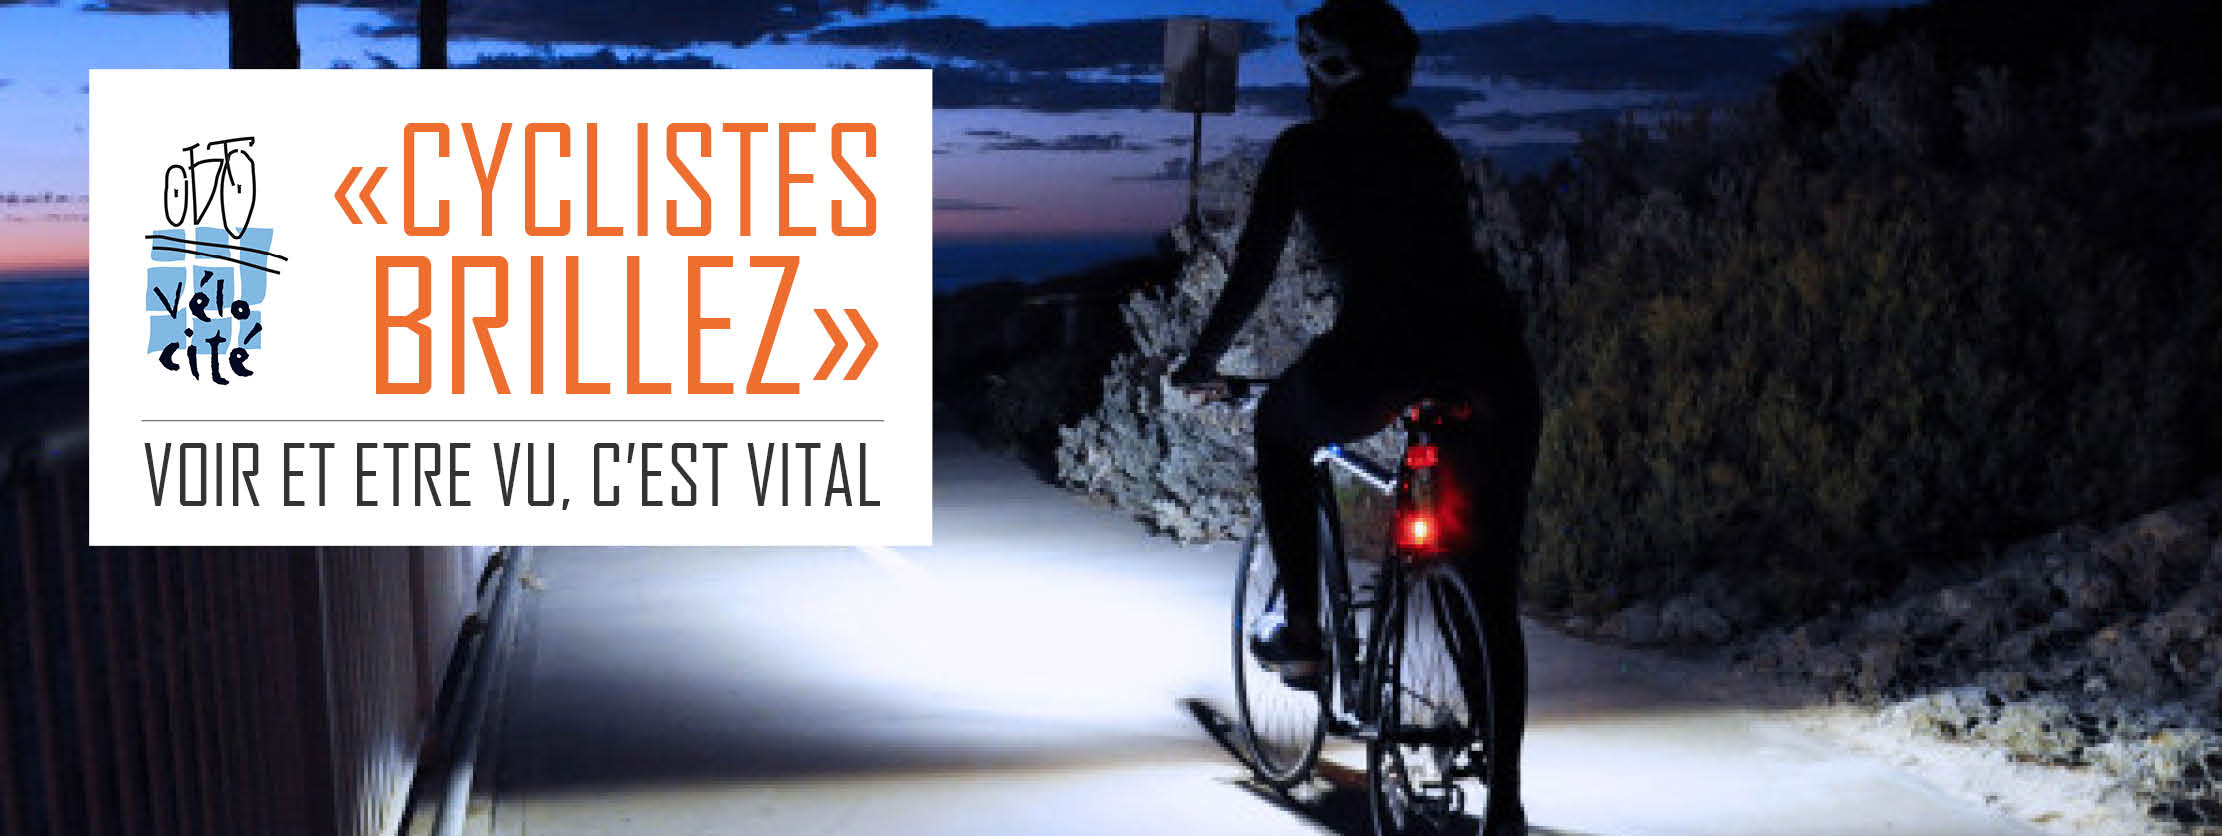 Cyclistes brillez – jeudi 24 novembre